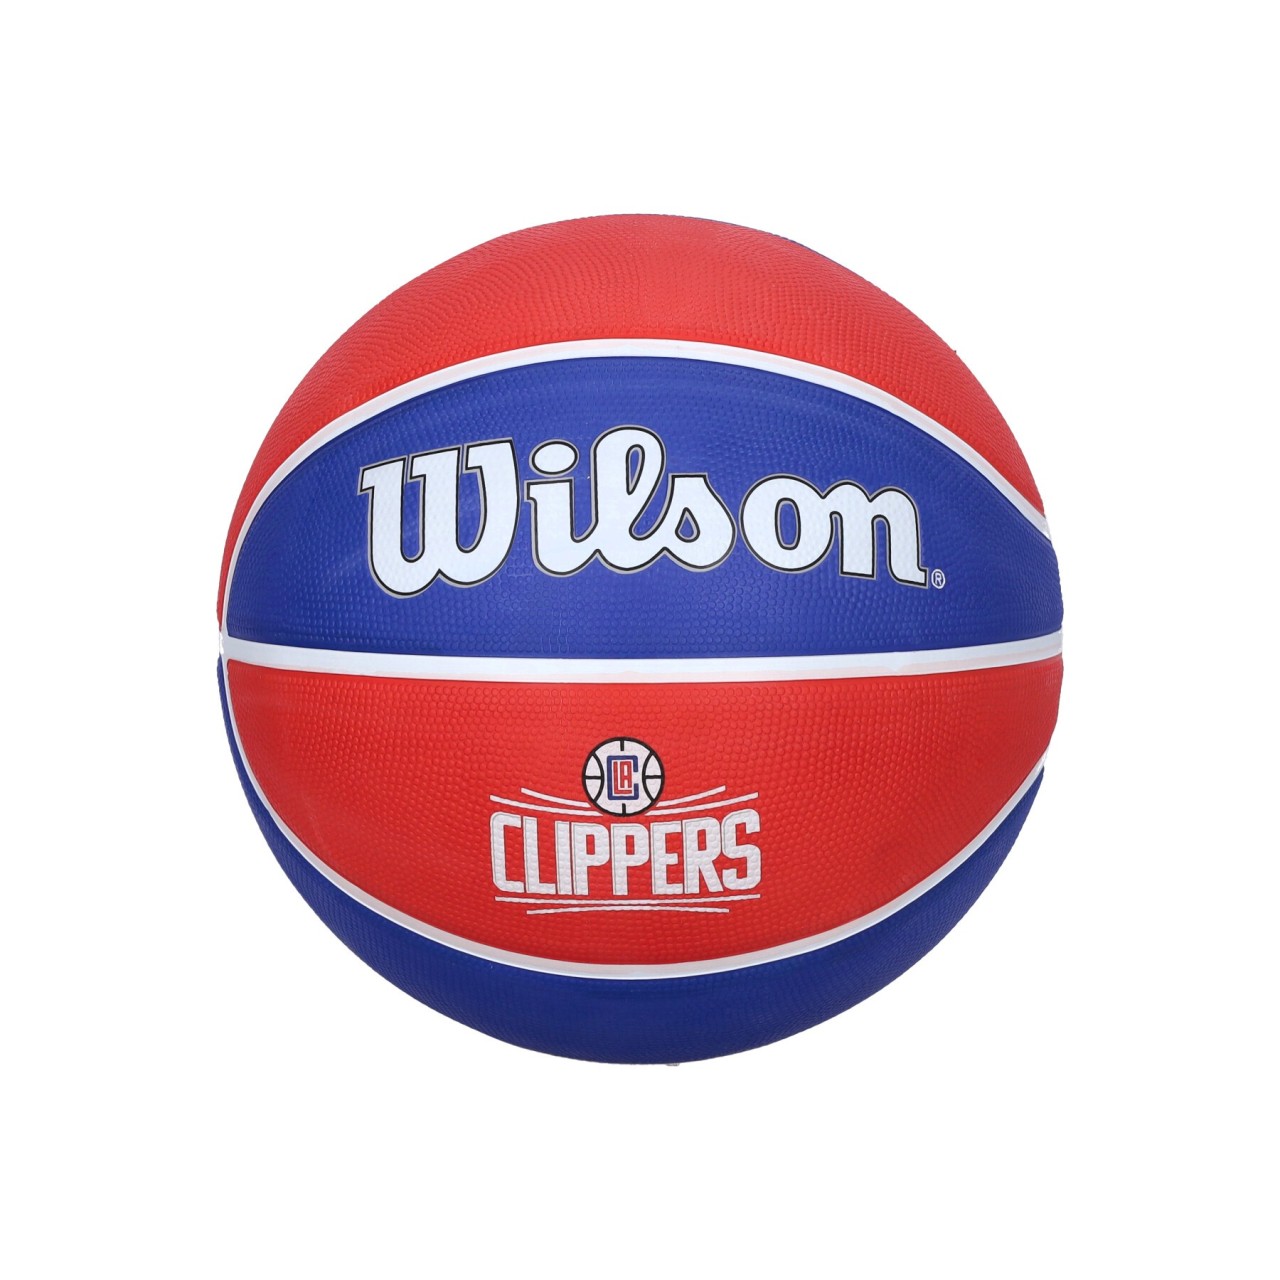 WILSON TEAM NBA TEAM TRIBUTE BASKETBALL SIZE 7 LOSCLI WTB1300XBLAC